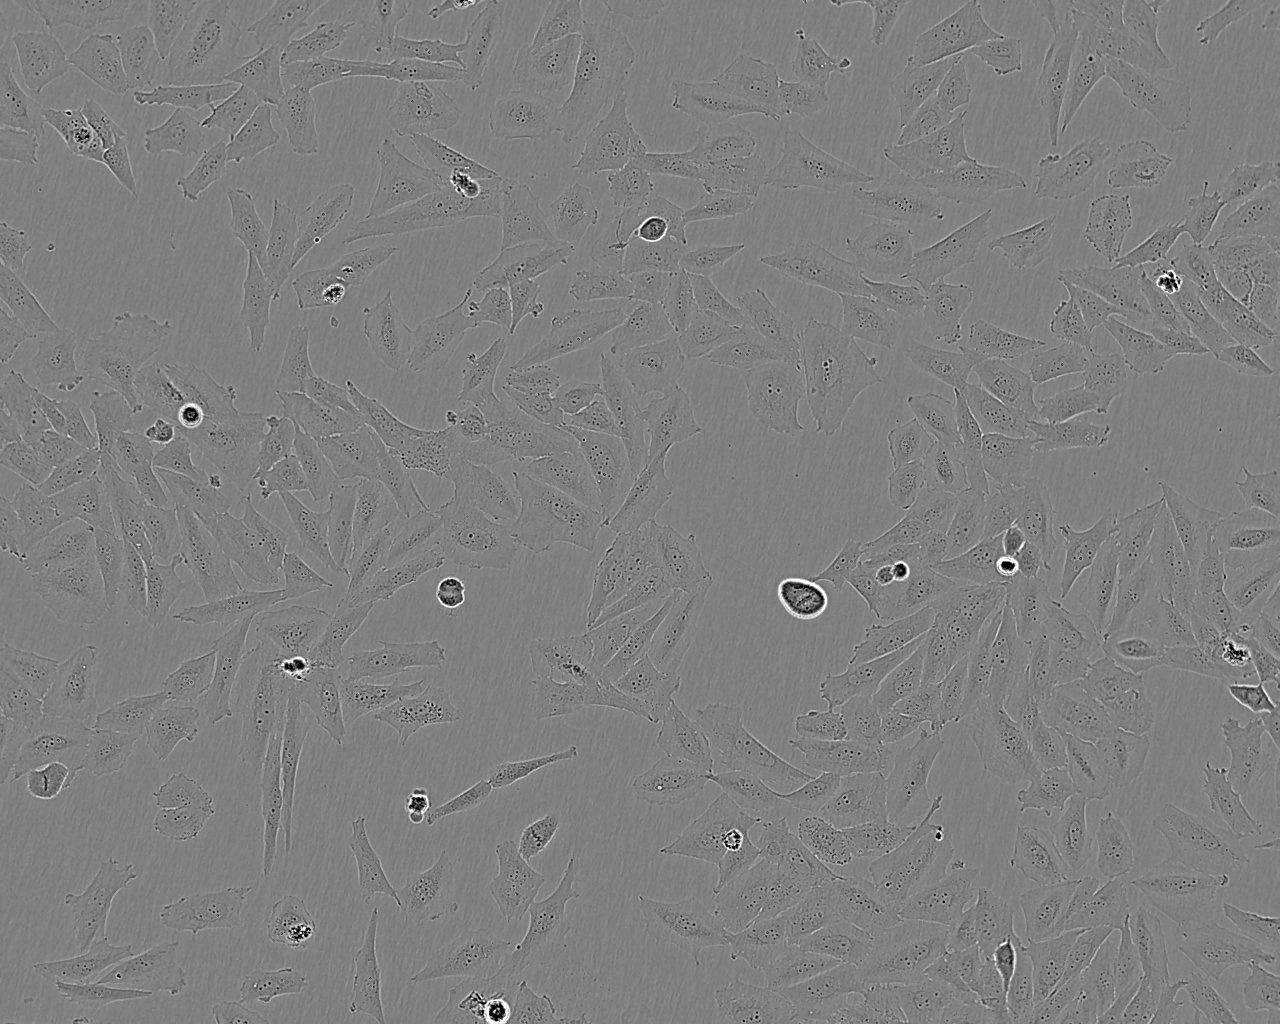 COLO 741 Fresh Cells|人直肠癌细胞(送STR基因图谱),COLO 741 Fresh Cells